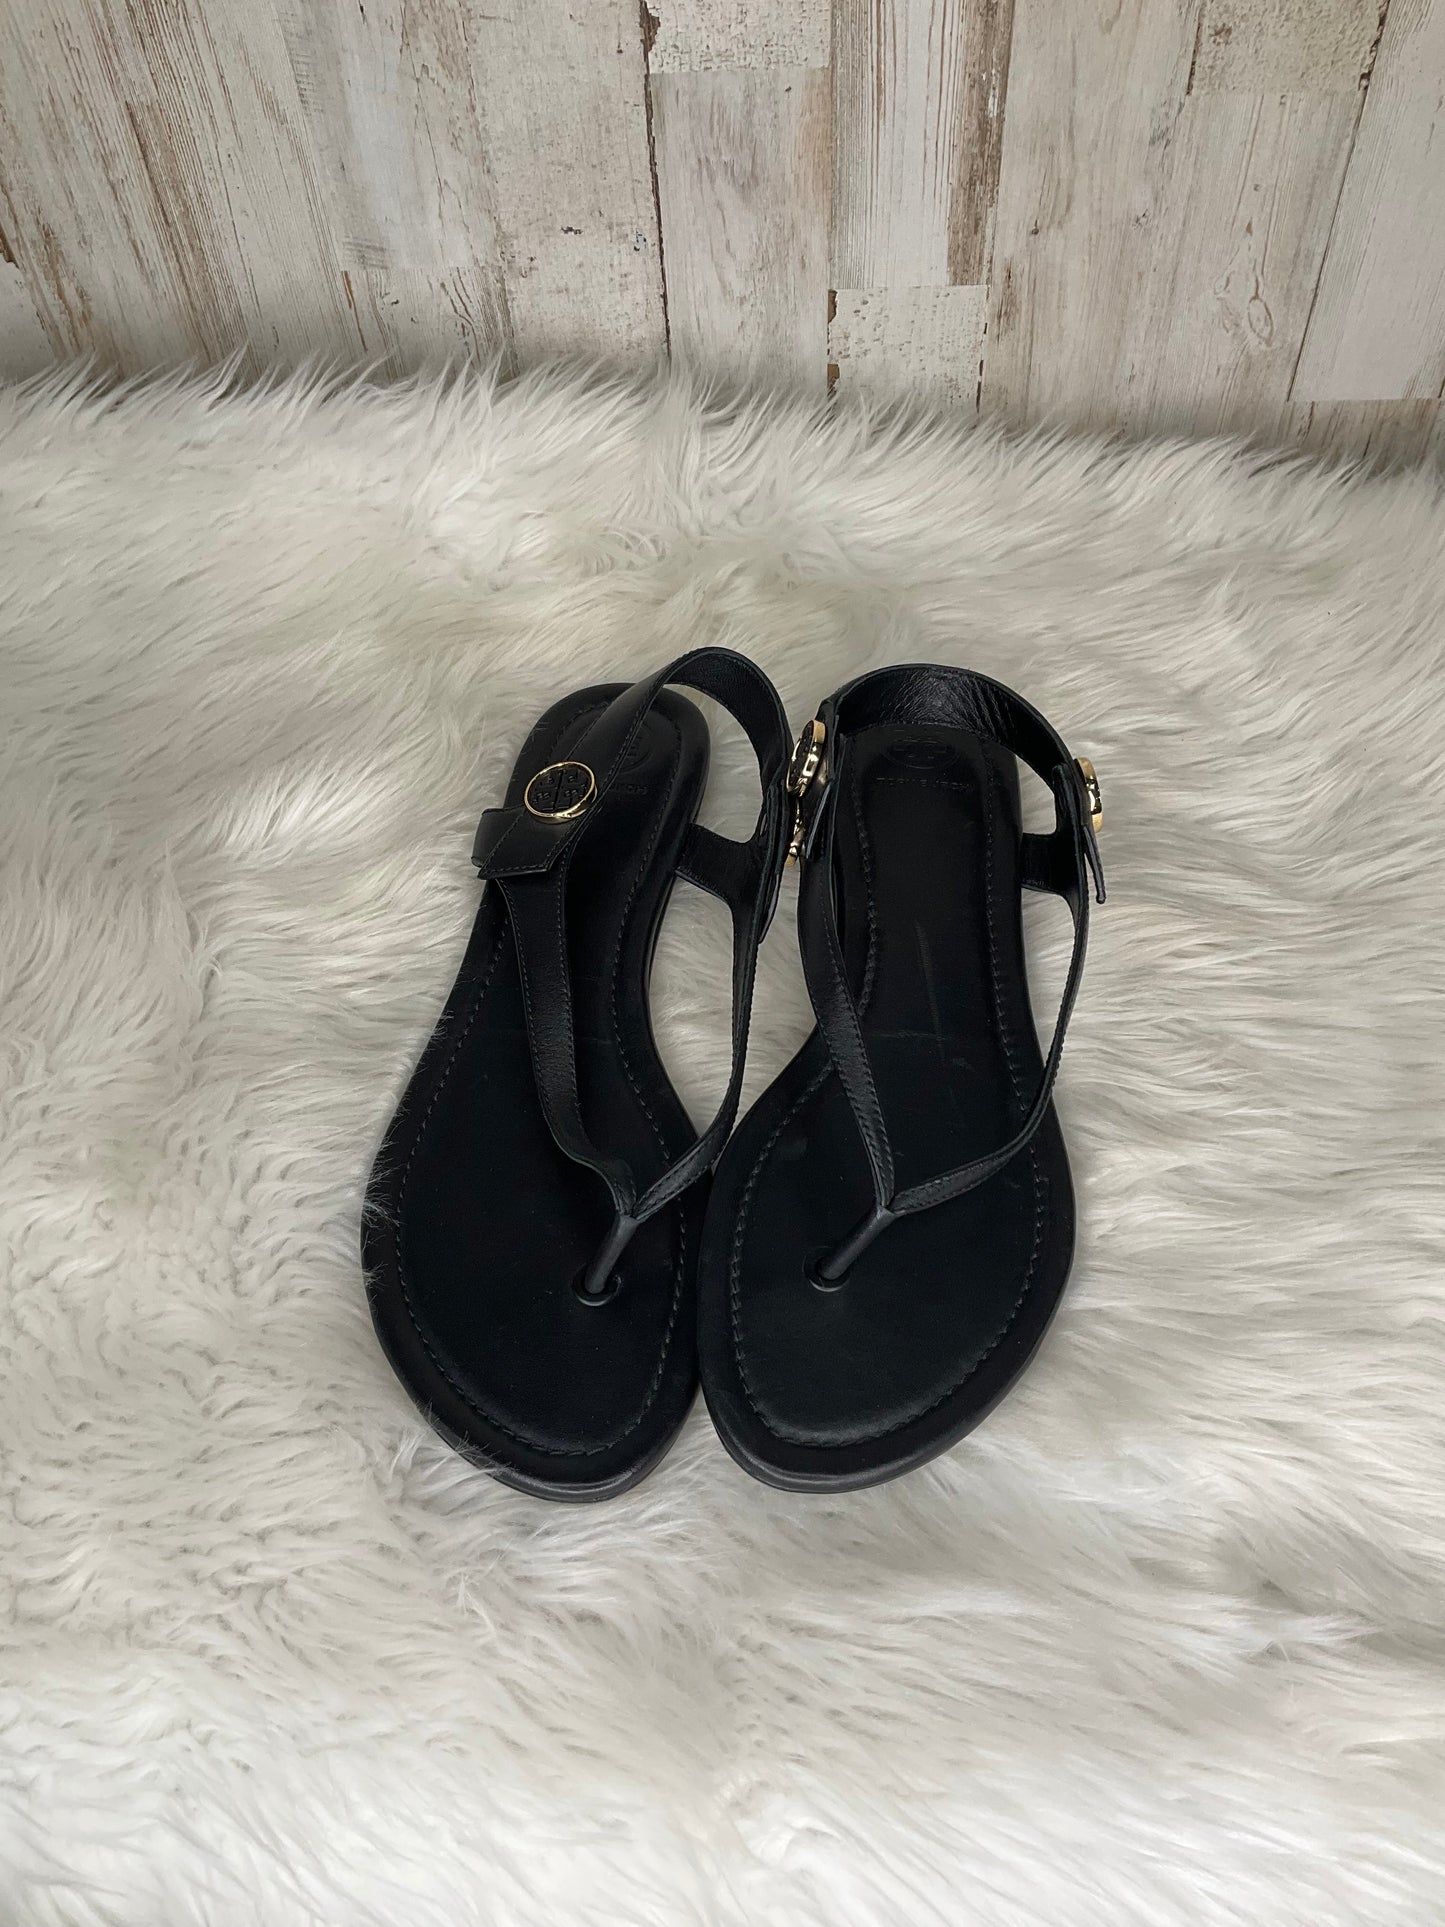 Black Sandals Flats Tory Burch, Size 8.5